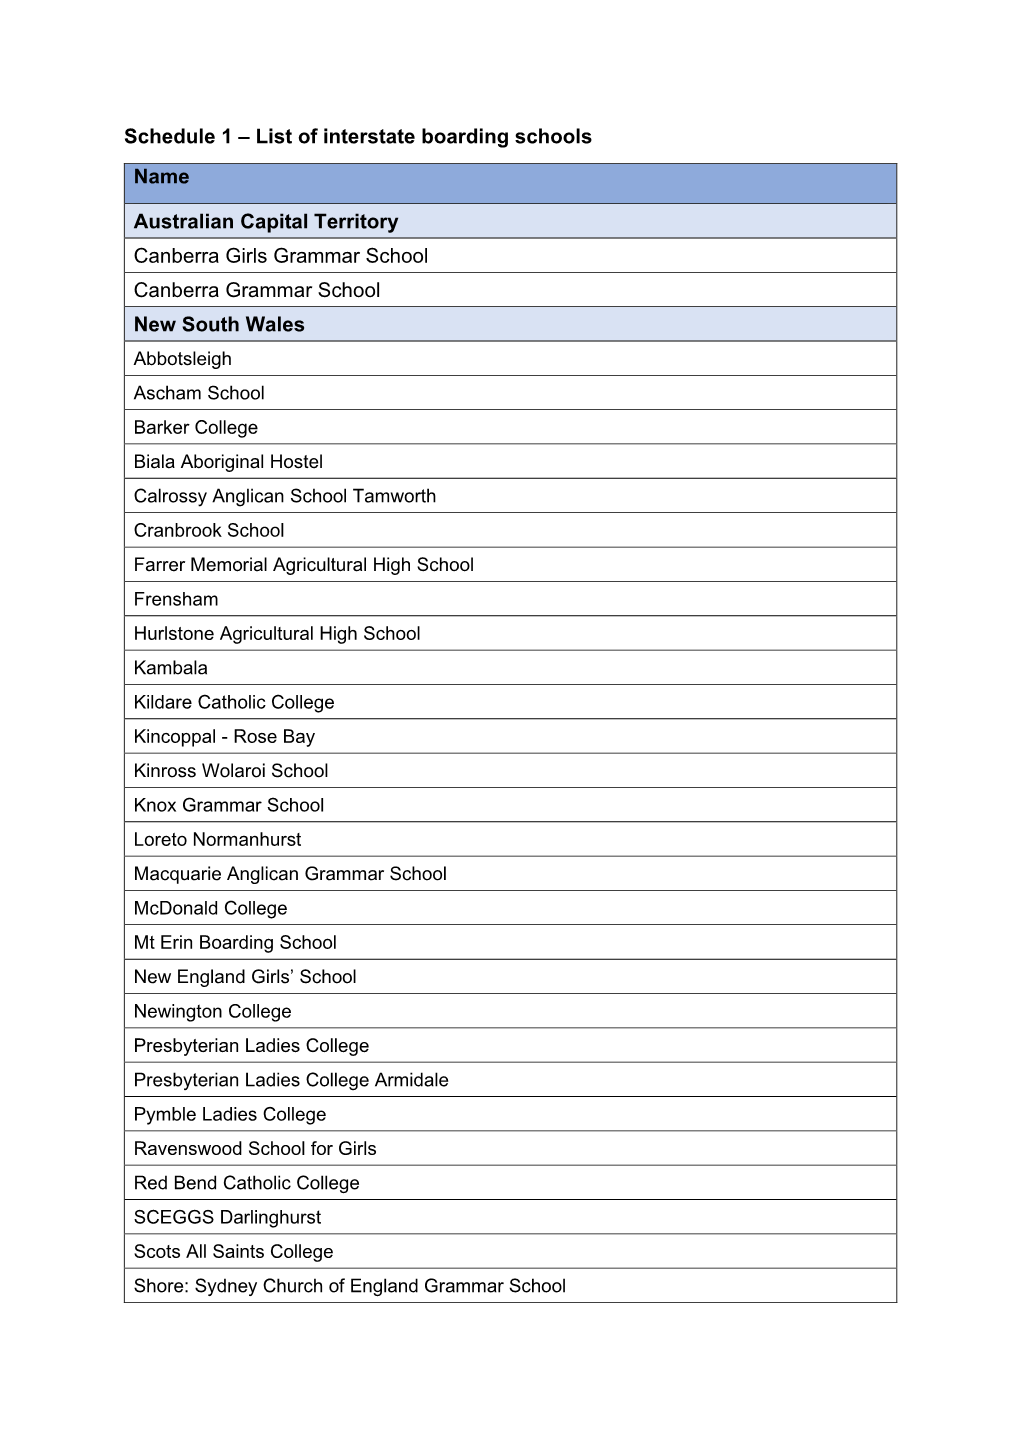 Schedule 1 – List of Interstate Boarding Schools Name